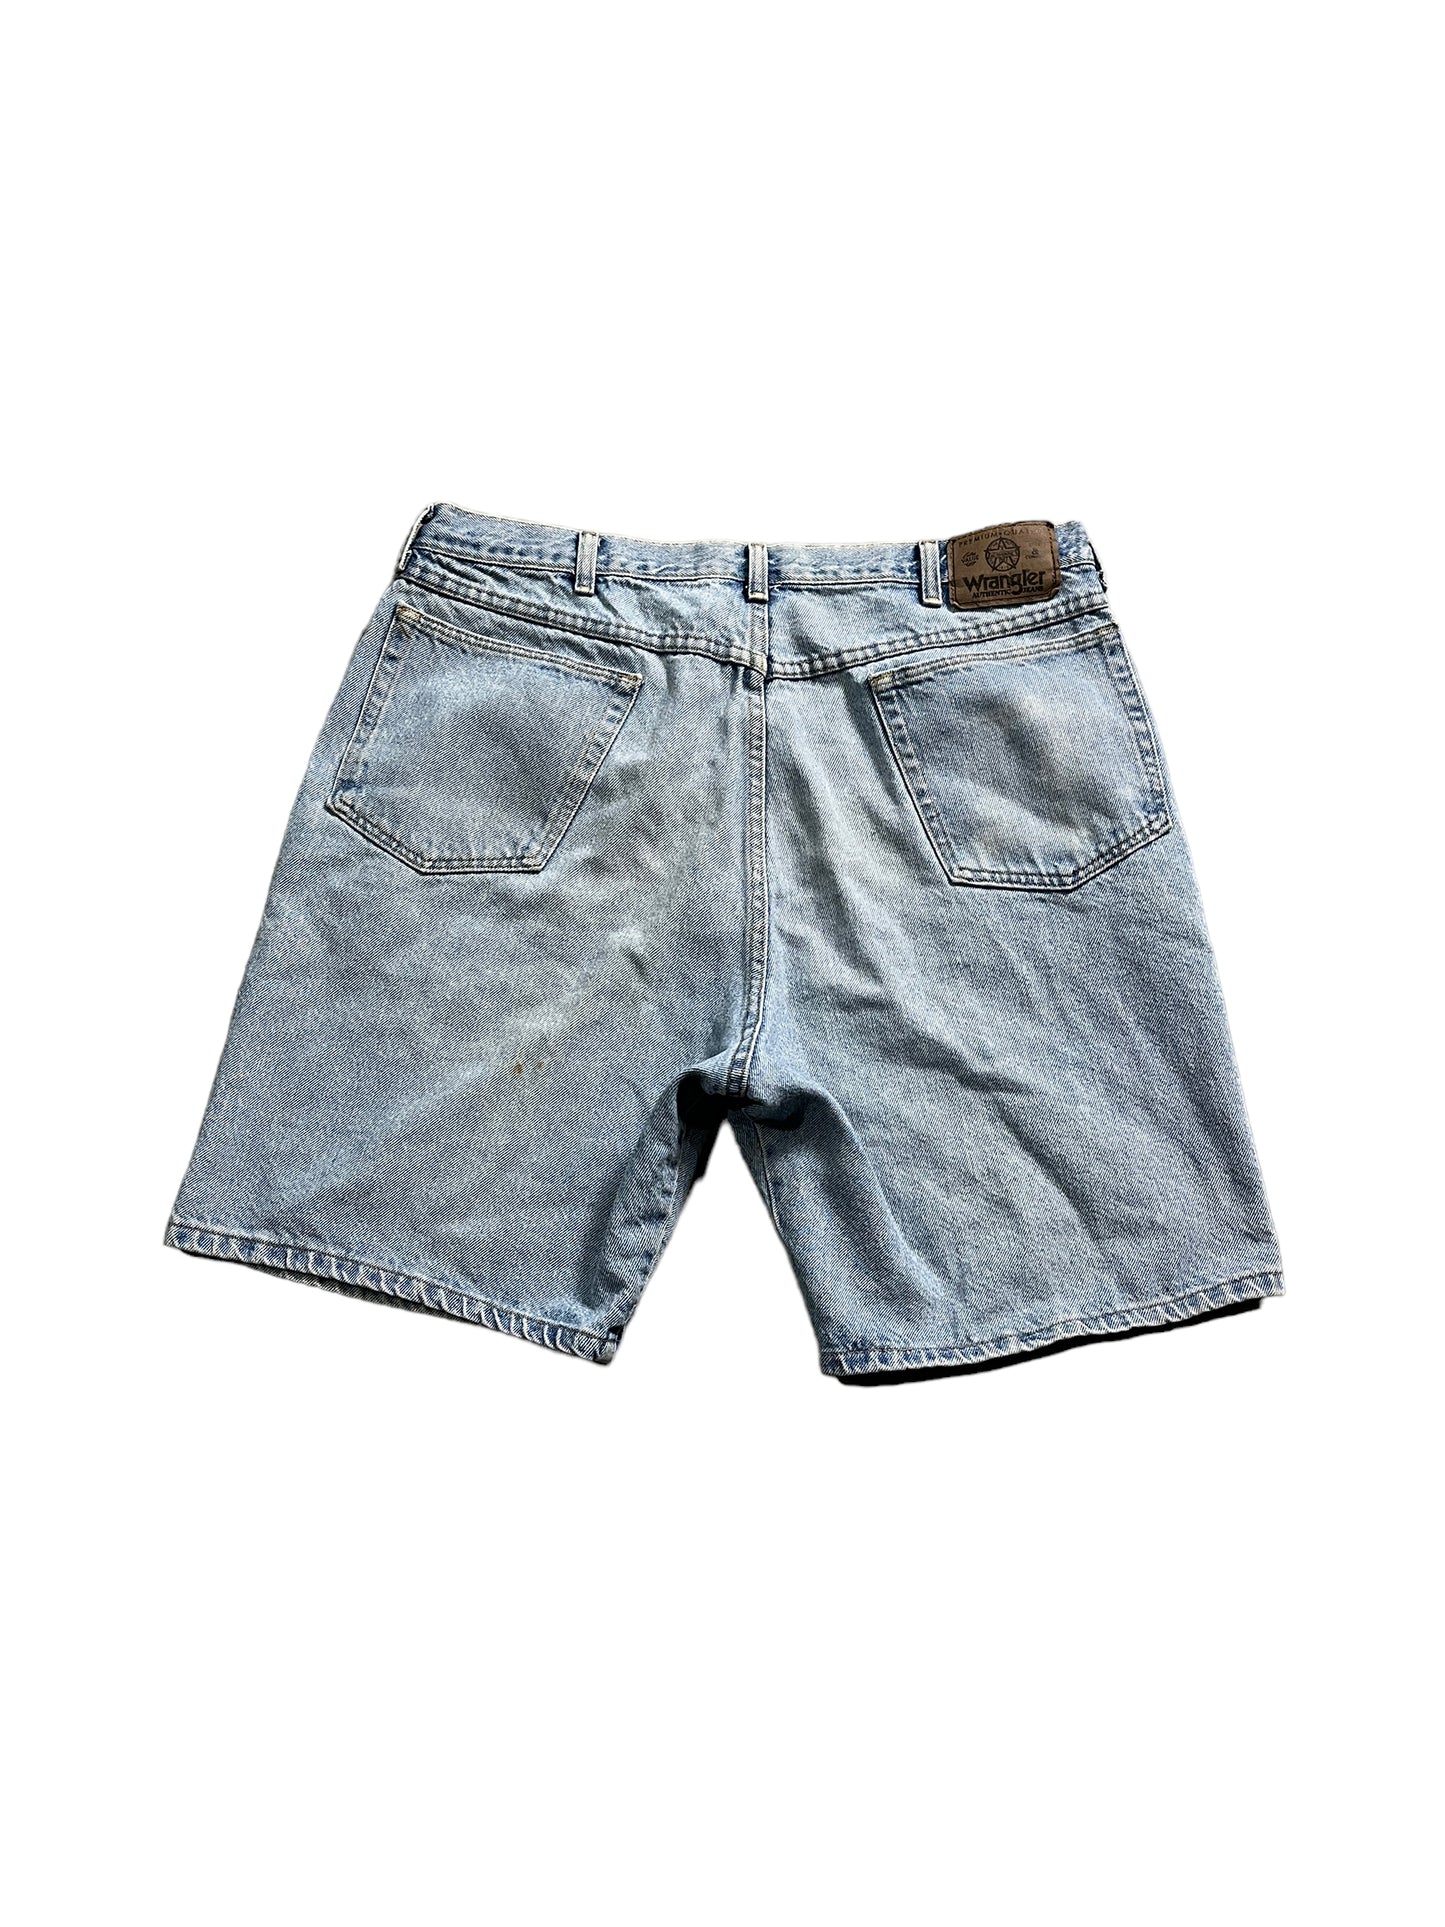 Vintage Wrangler Jean Shorts